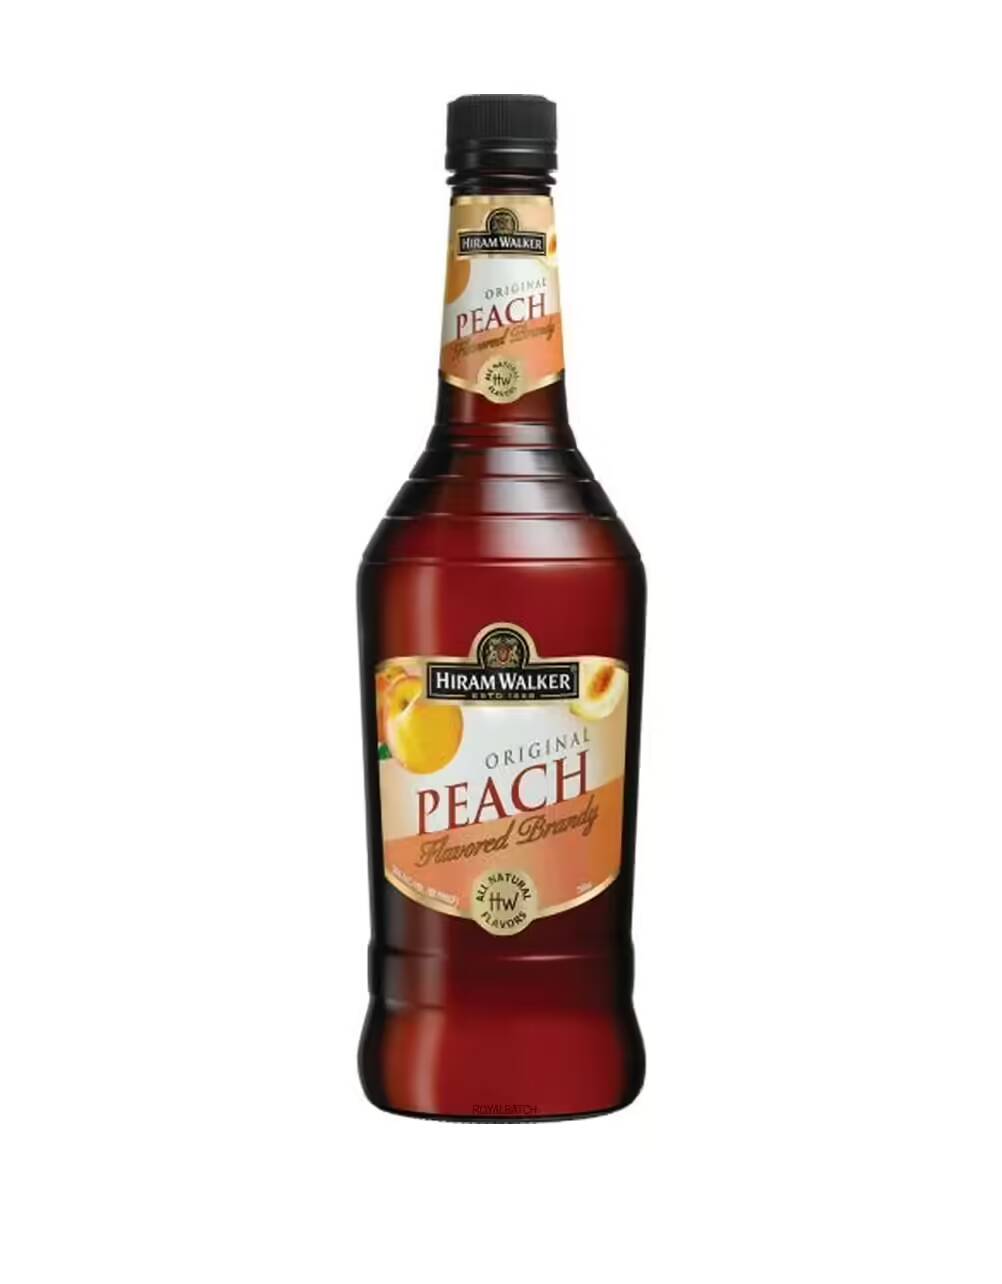 Hiram Walker Peach Original Flavored Brandy